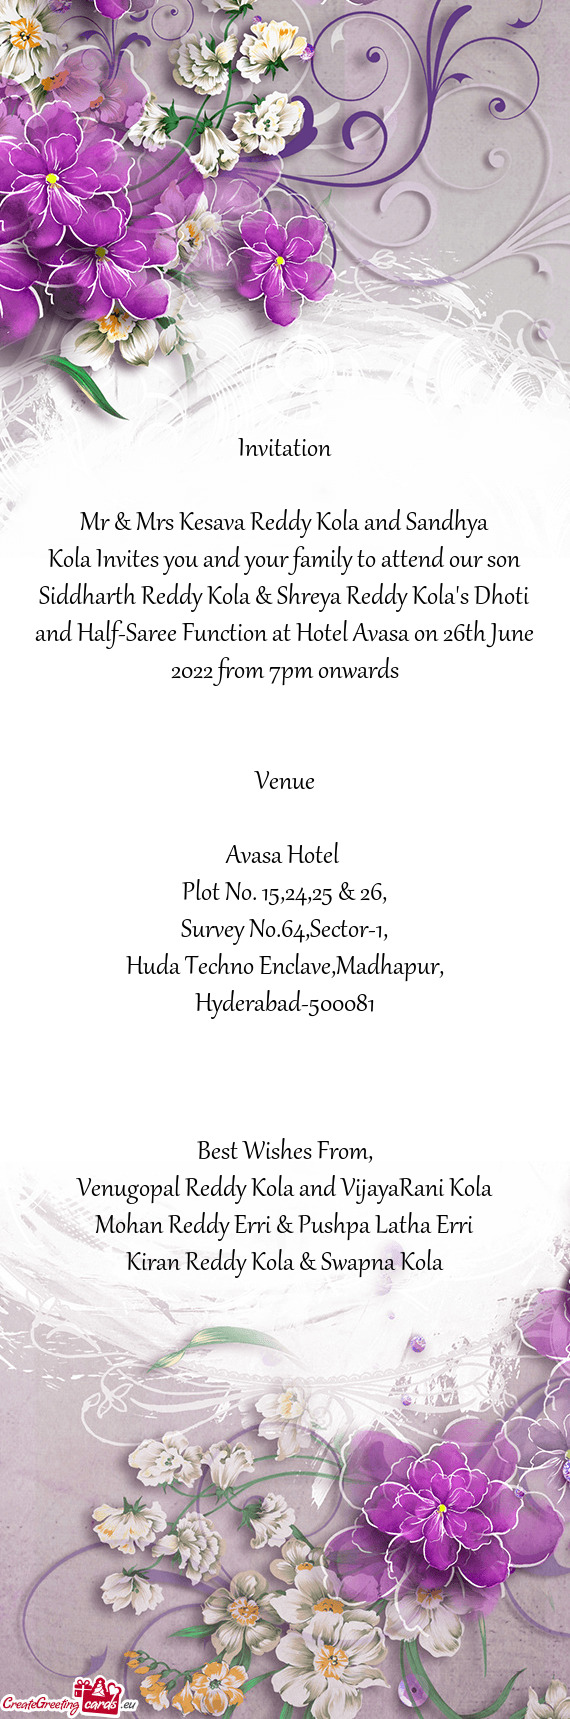 Kola Invites you and your family to attend our son Siddharth Reddy Kola & Shreya Reddy Kola